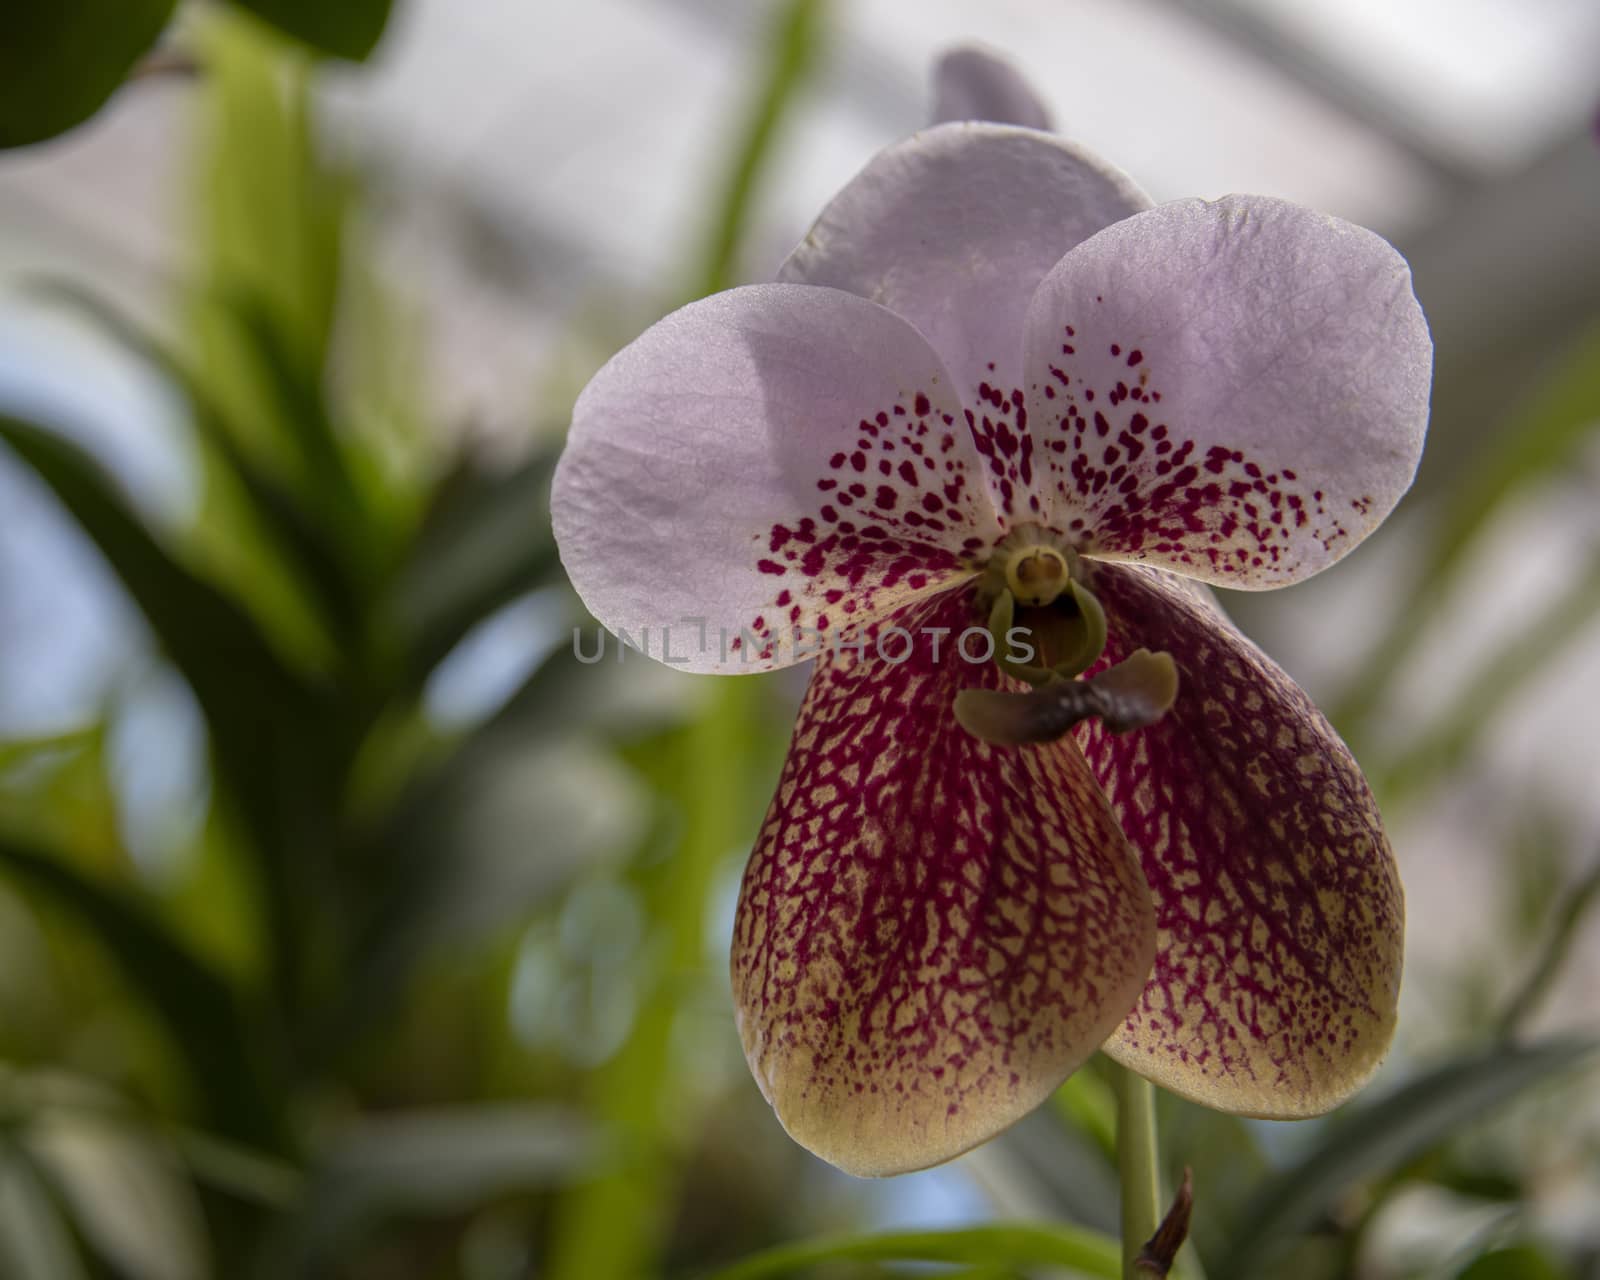 Sri Lanka, Botanical Garden - August 2015 - Orchid blooms